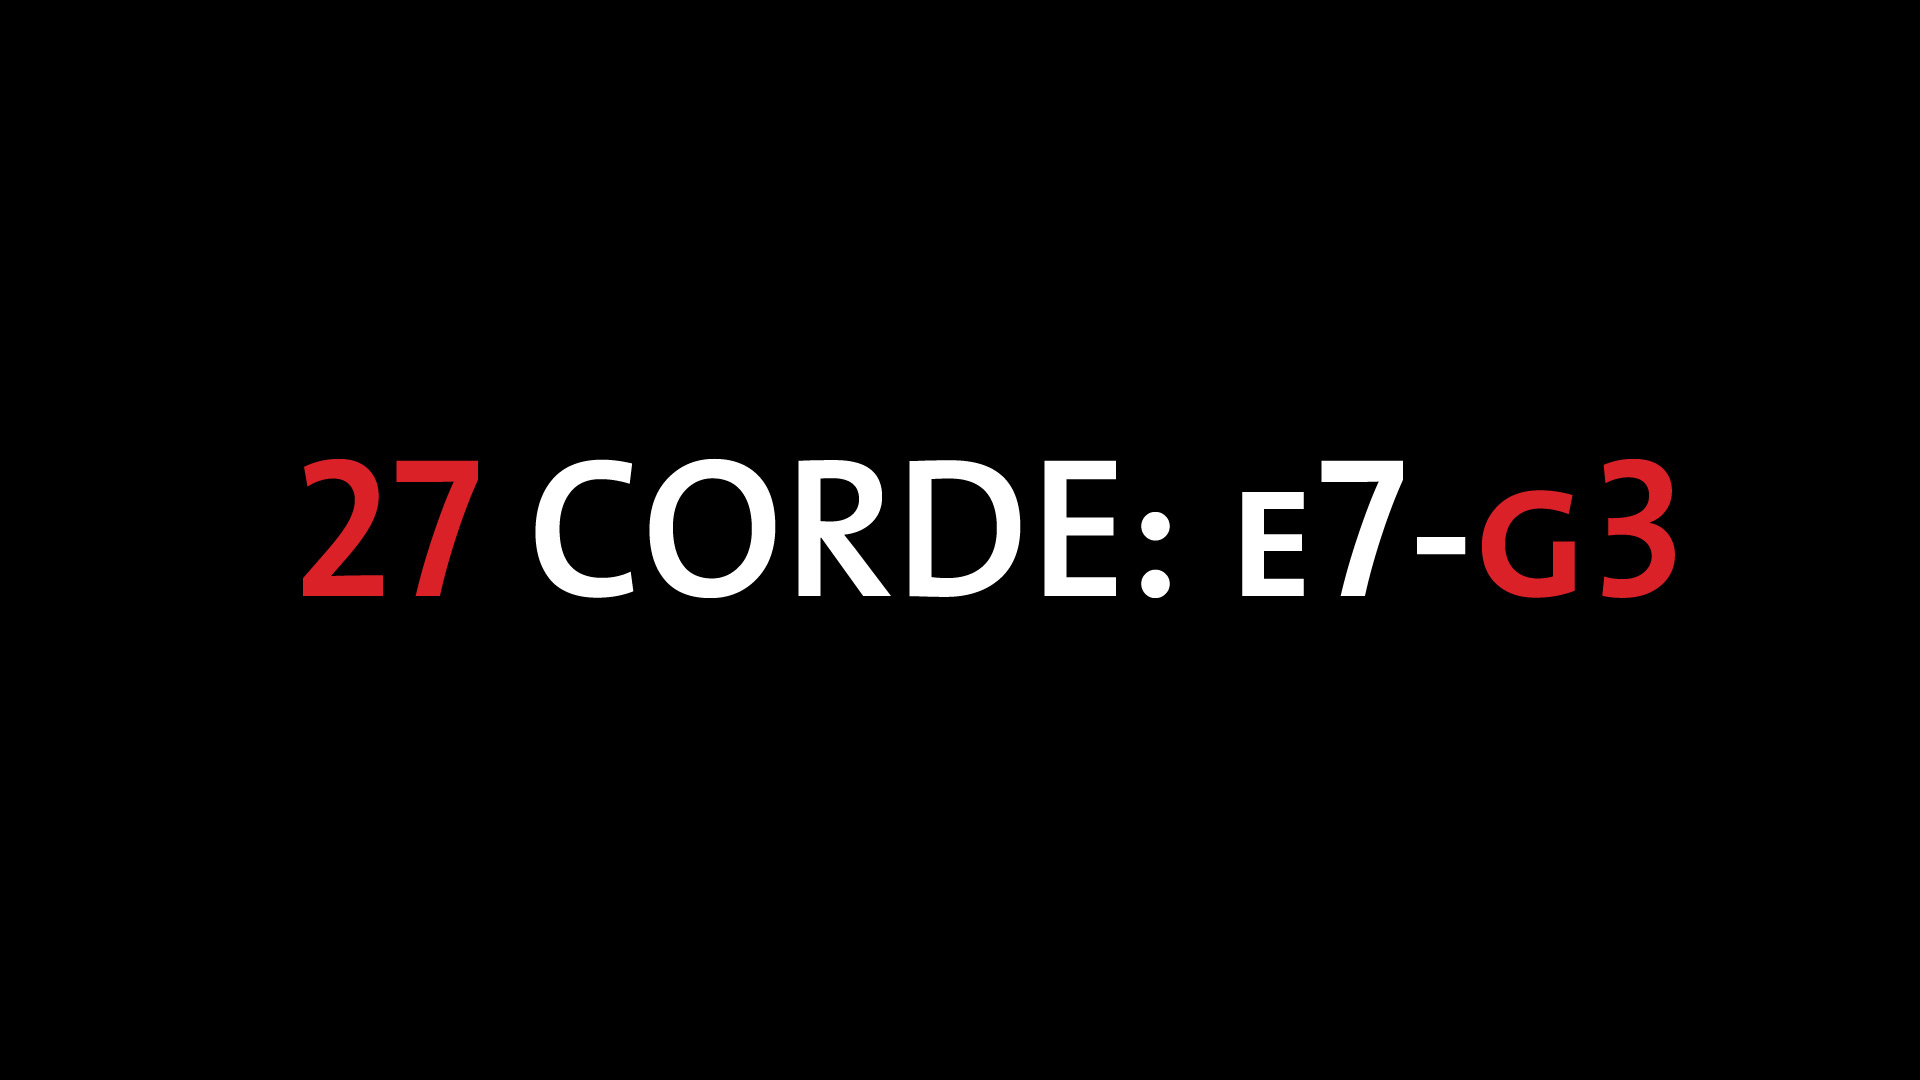 27 corde: E7-G3